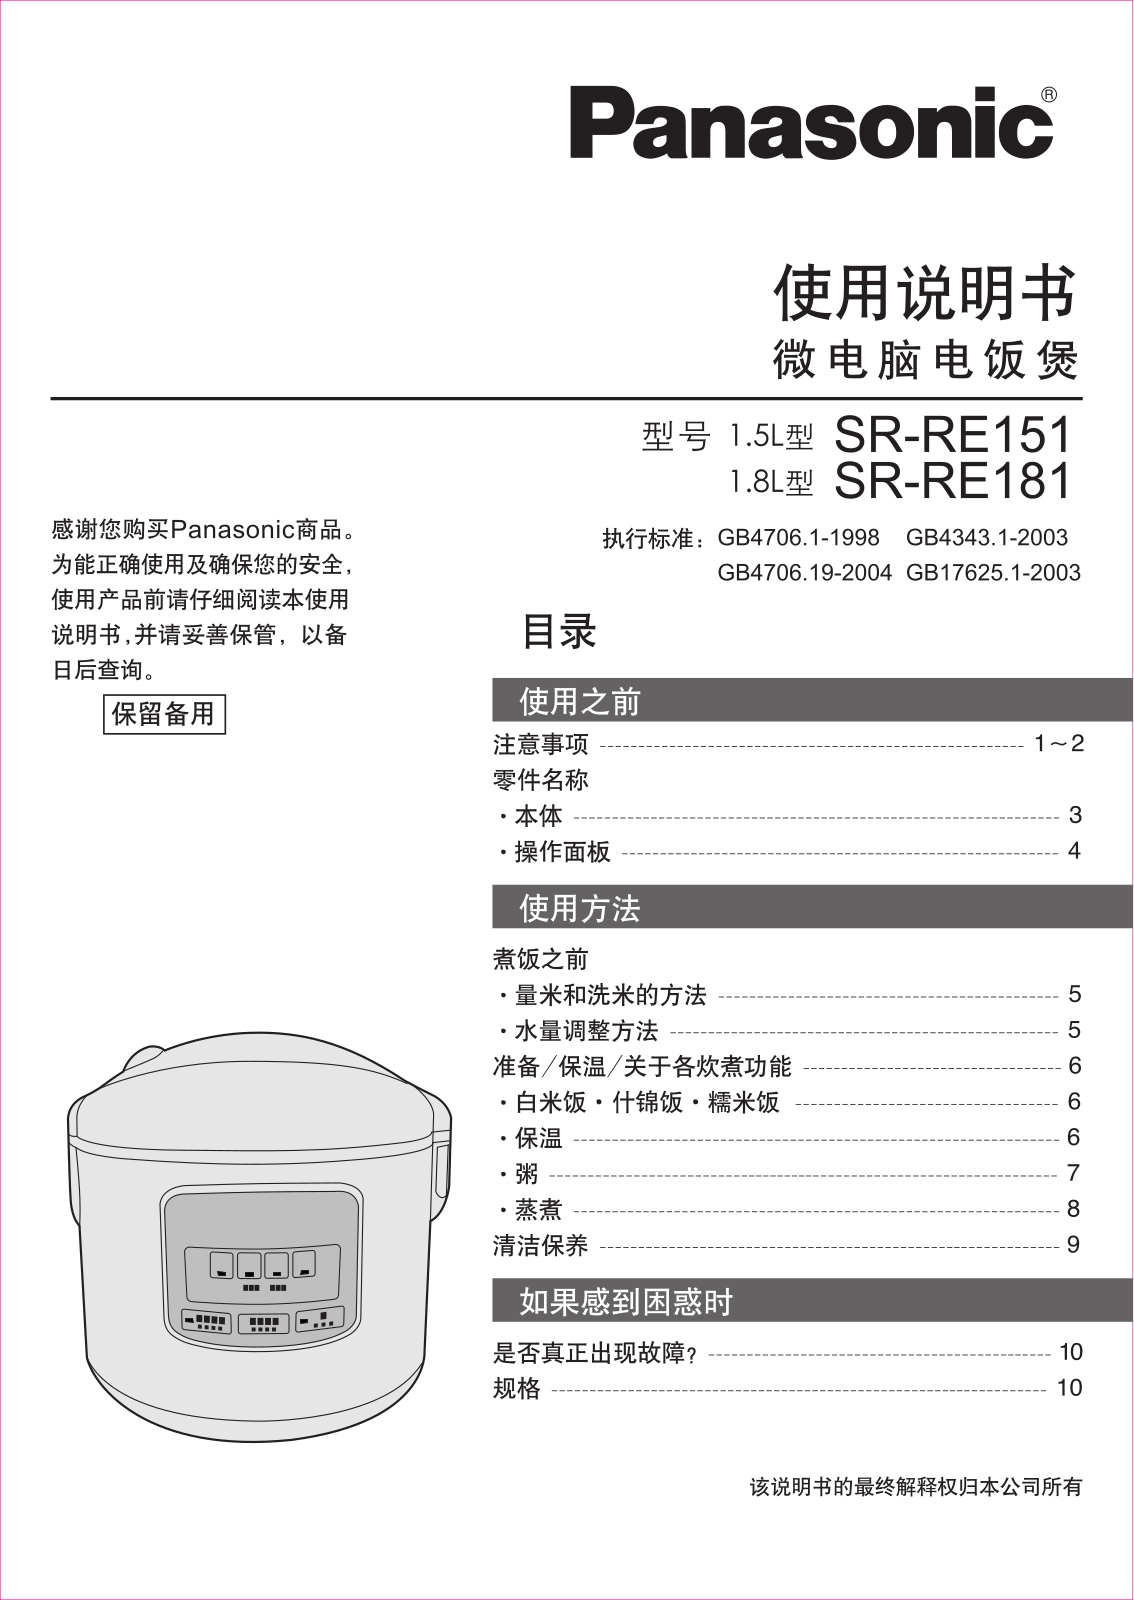 Panasonic SR-RE151, SR-RE181 User Manual